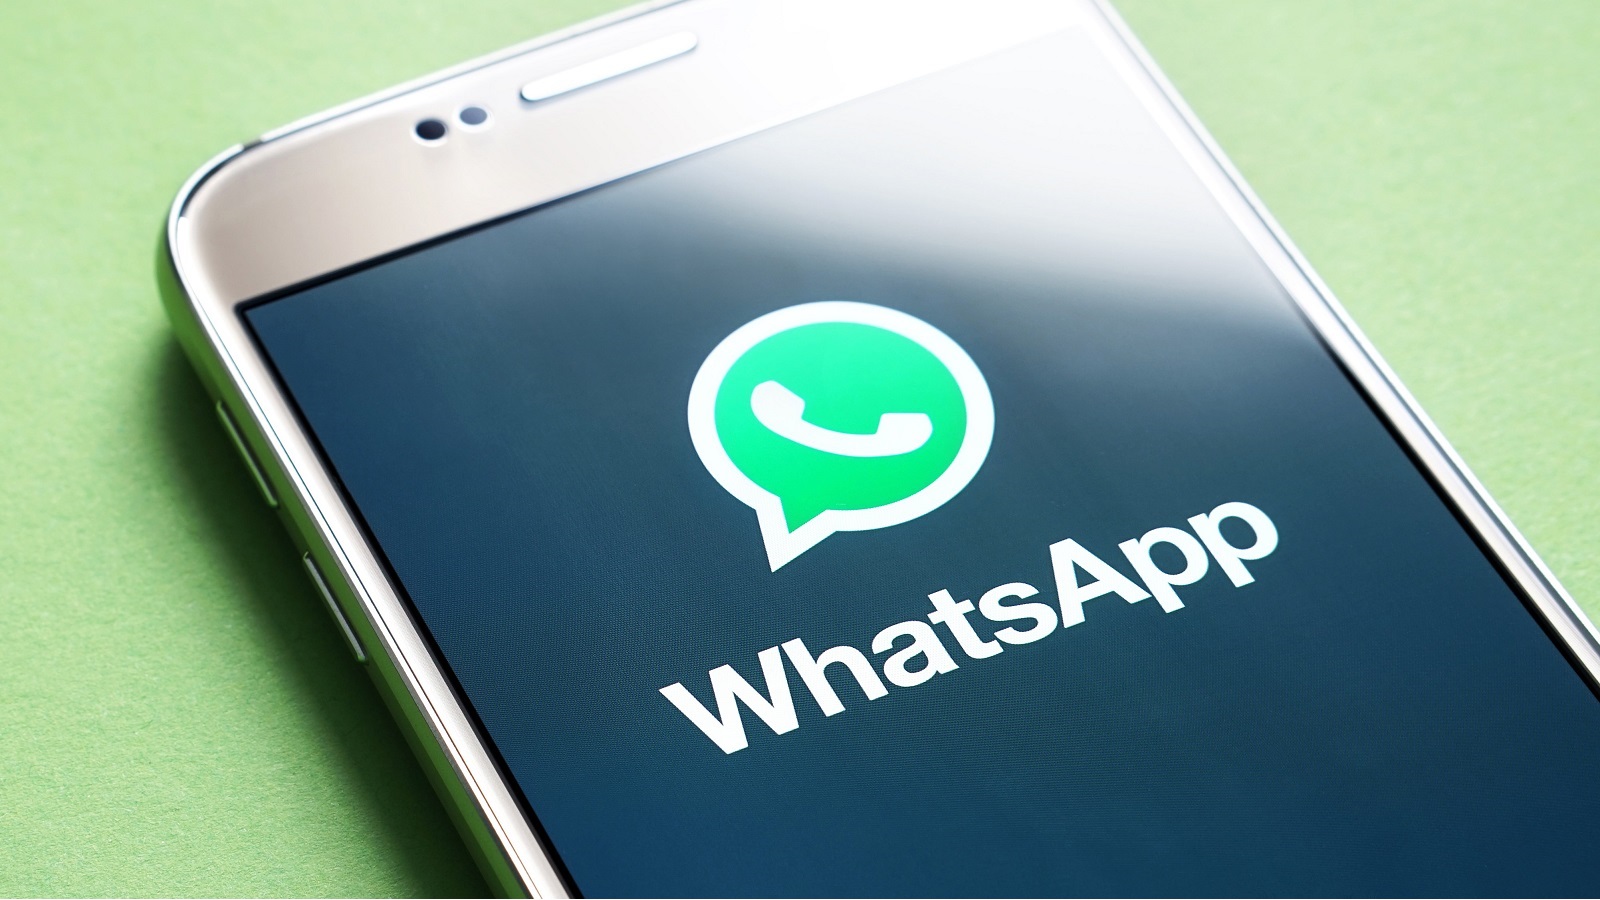 WhatsApp introduce l'Intelligenza artificiale Generativa